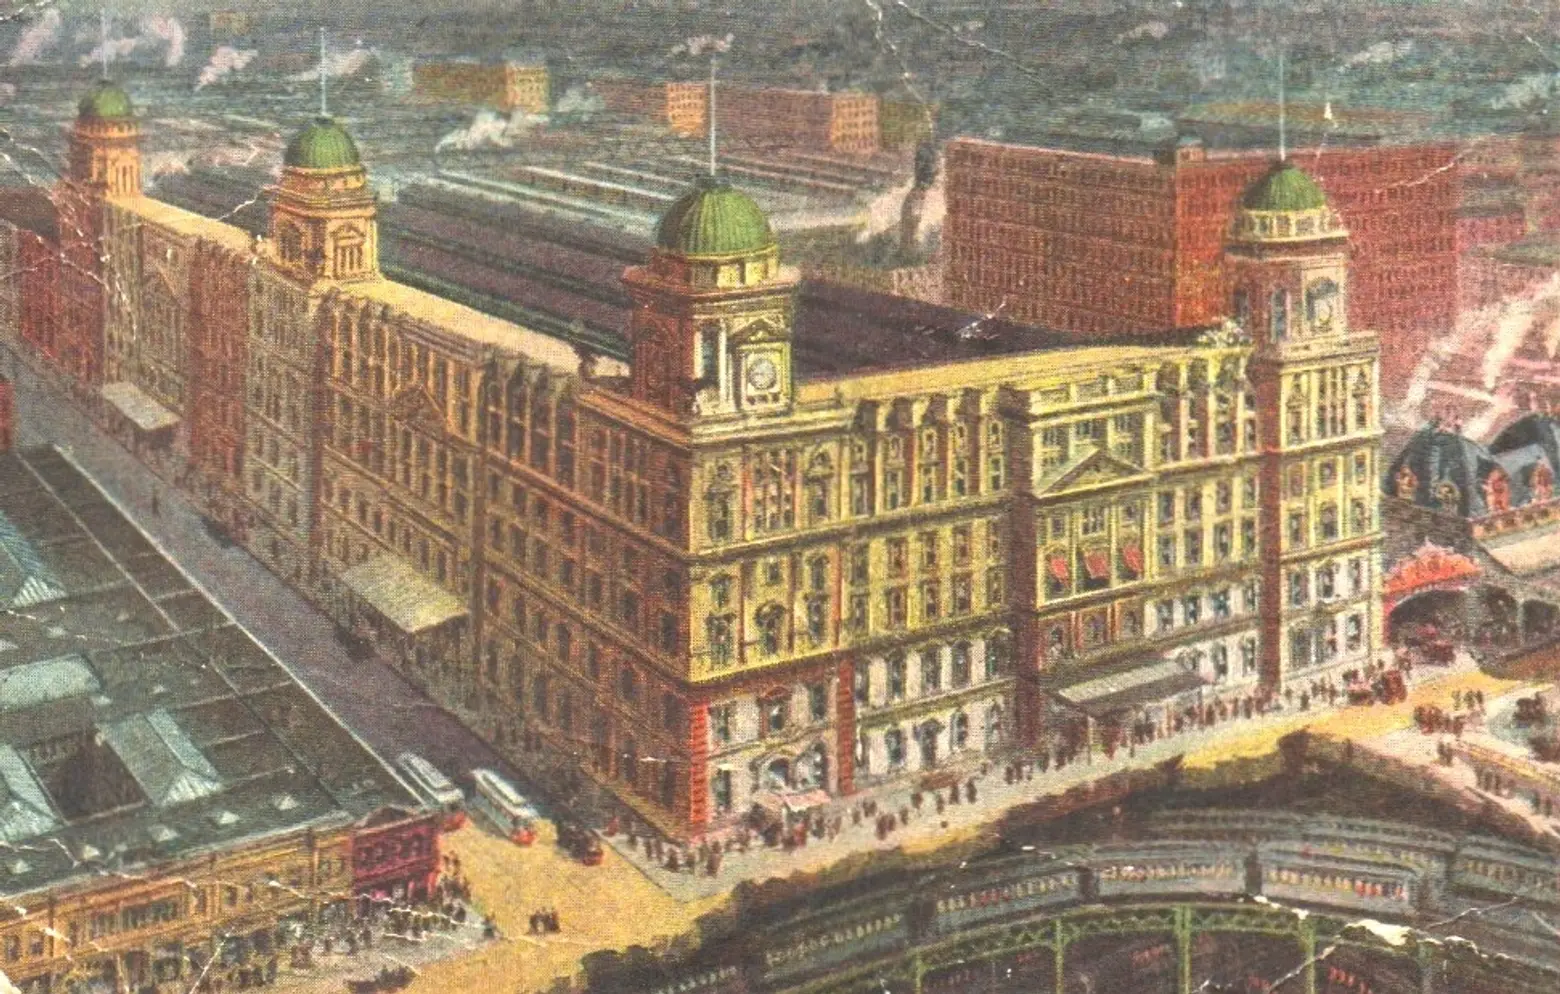 Grand Central Station, Bradford Gilbert, historic photos of Grand Central